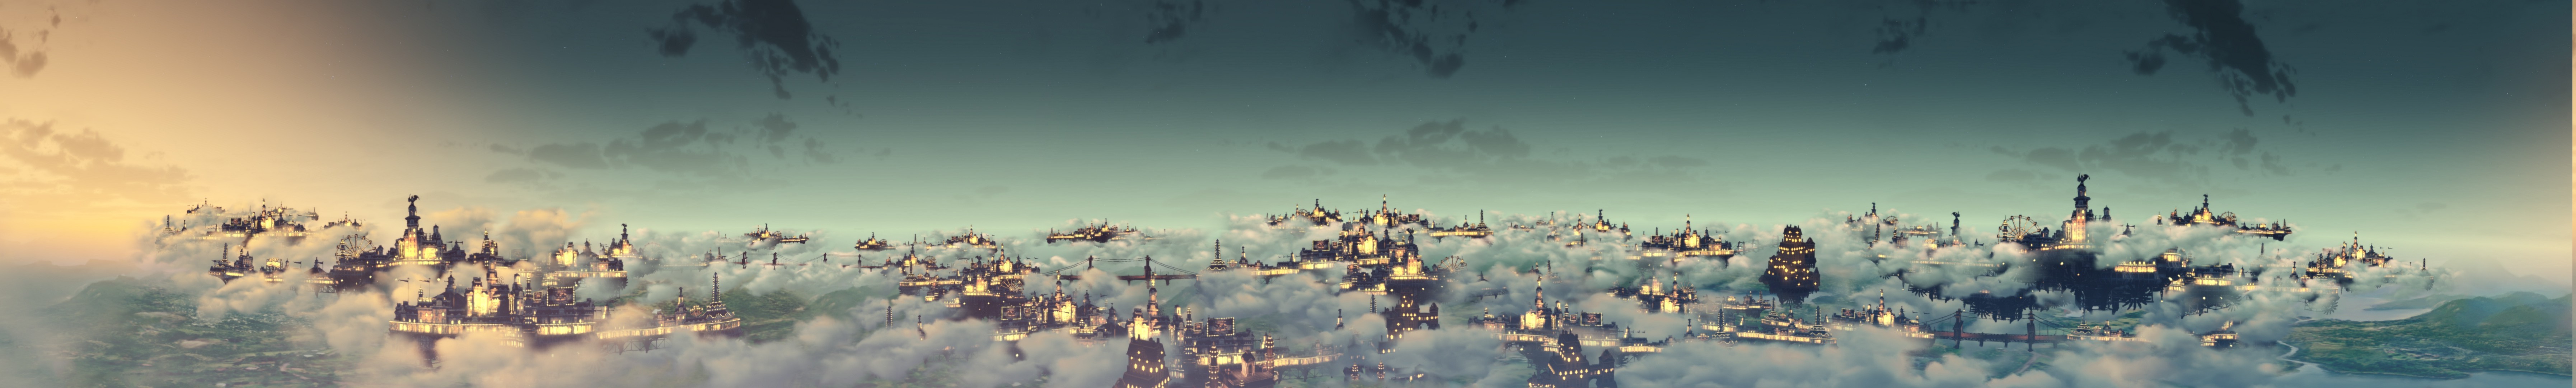 BioShock Infinite, Colombia, Artwork, Video Games, Clouds, City, BioShock Wallpaper